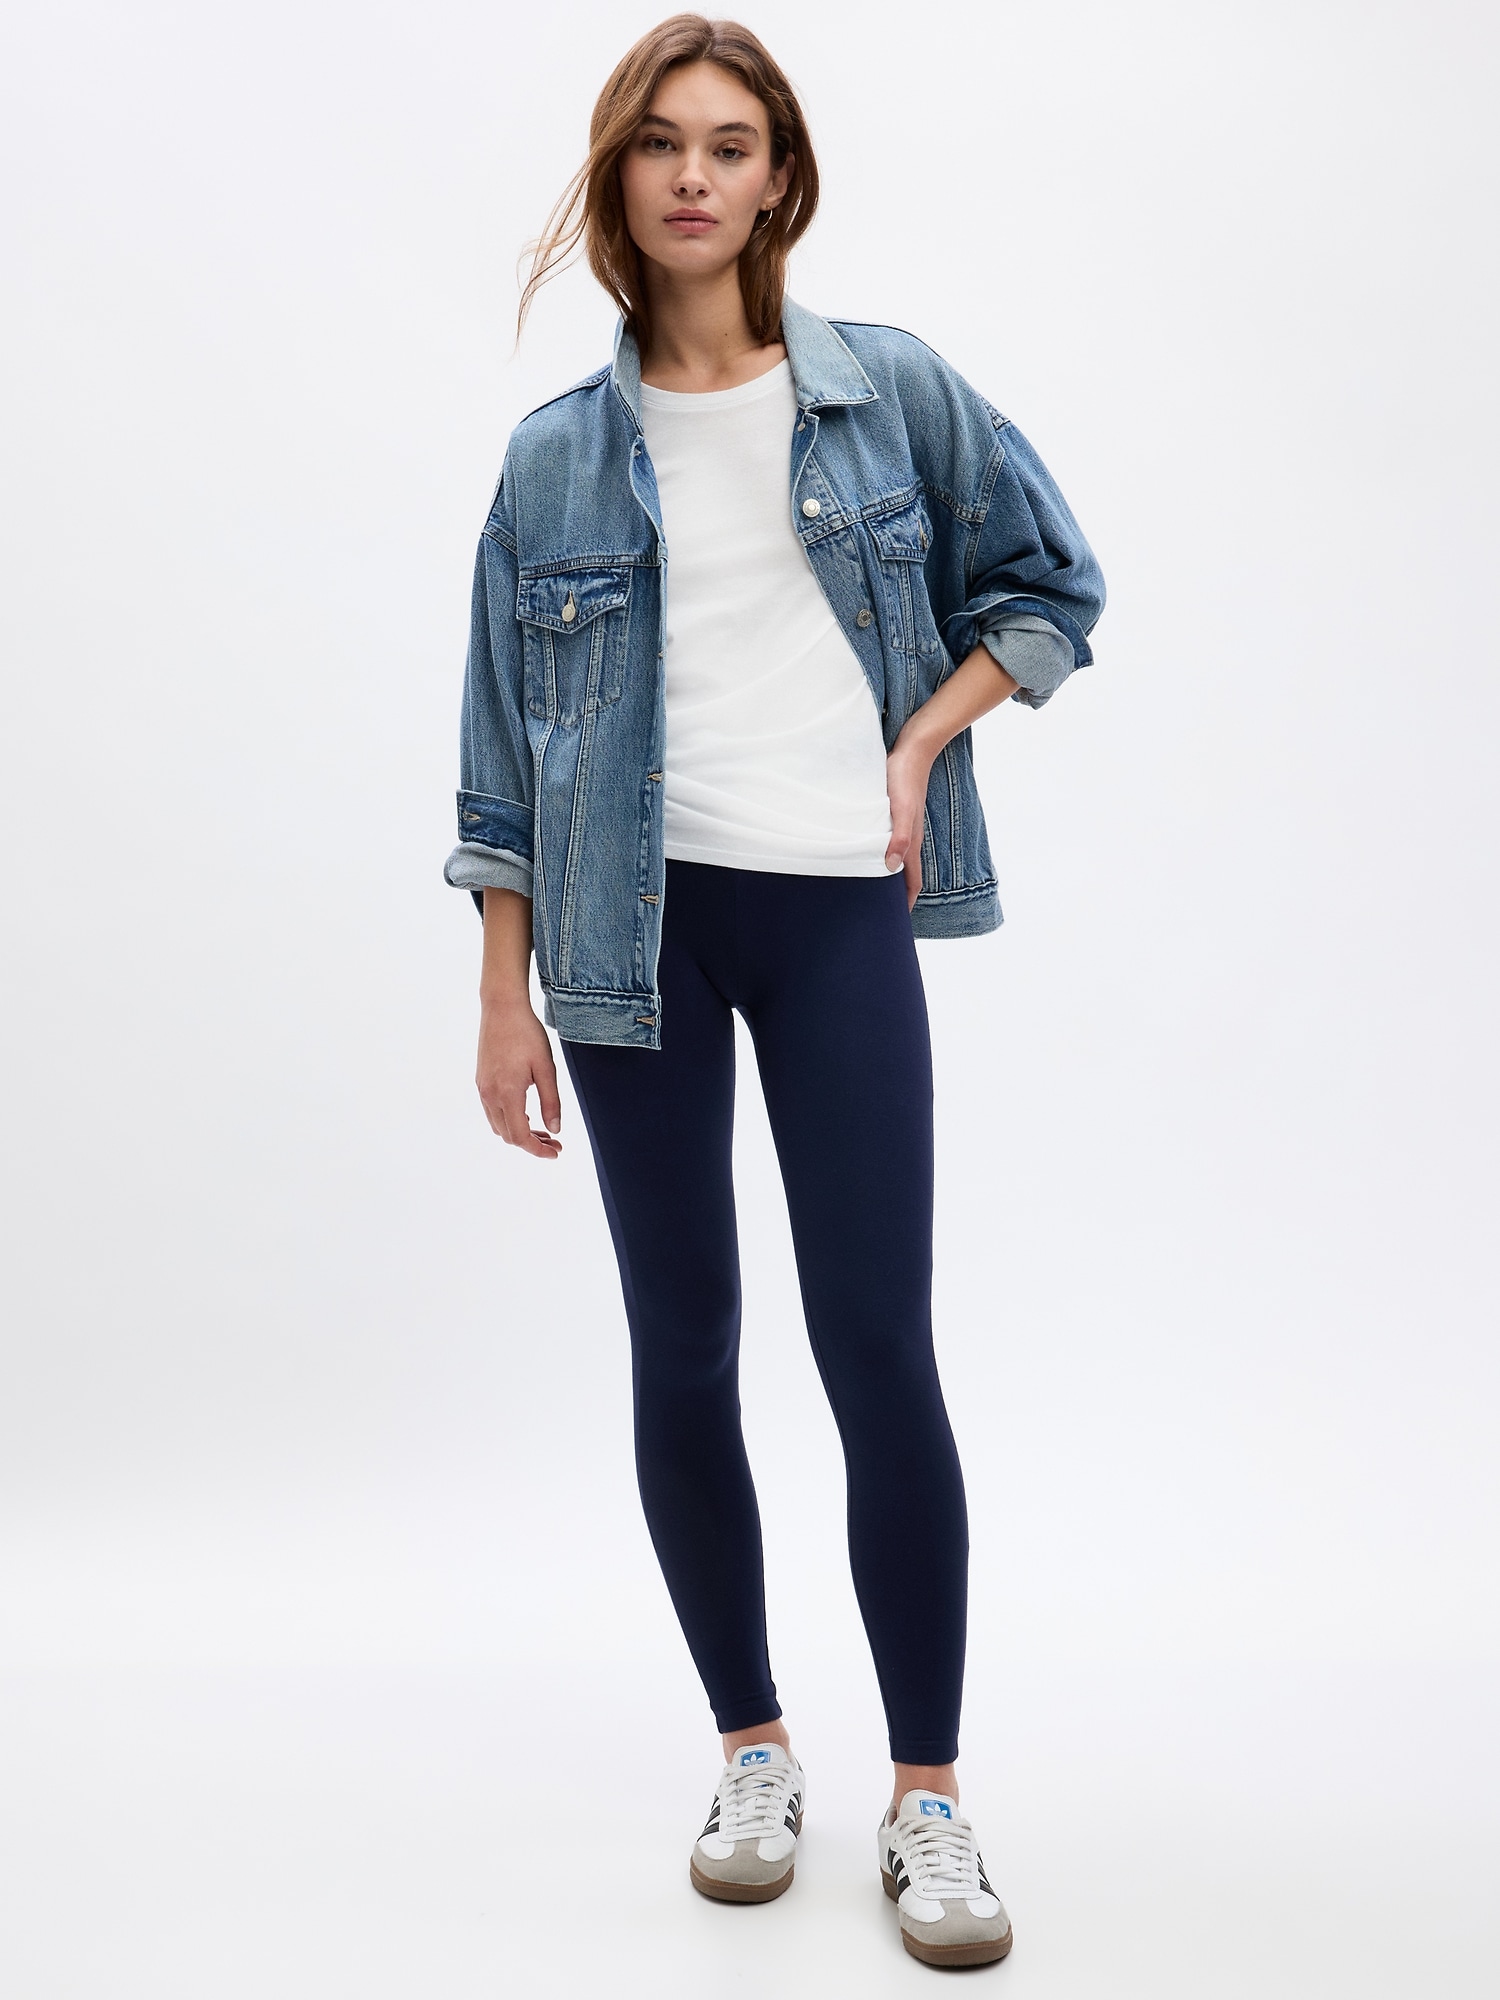 GAP, Jeans, Gap Jeans Womens 27 Short True Skinny Midrise Denim Jeggings  Dark Grey Casual